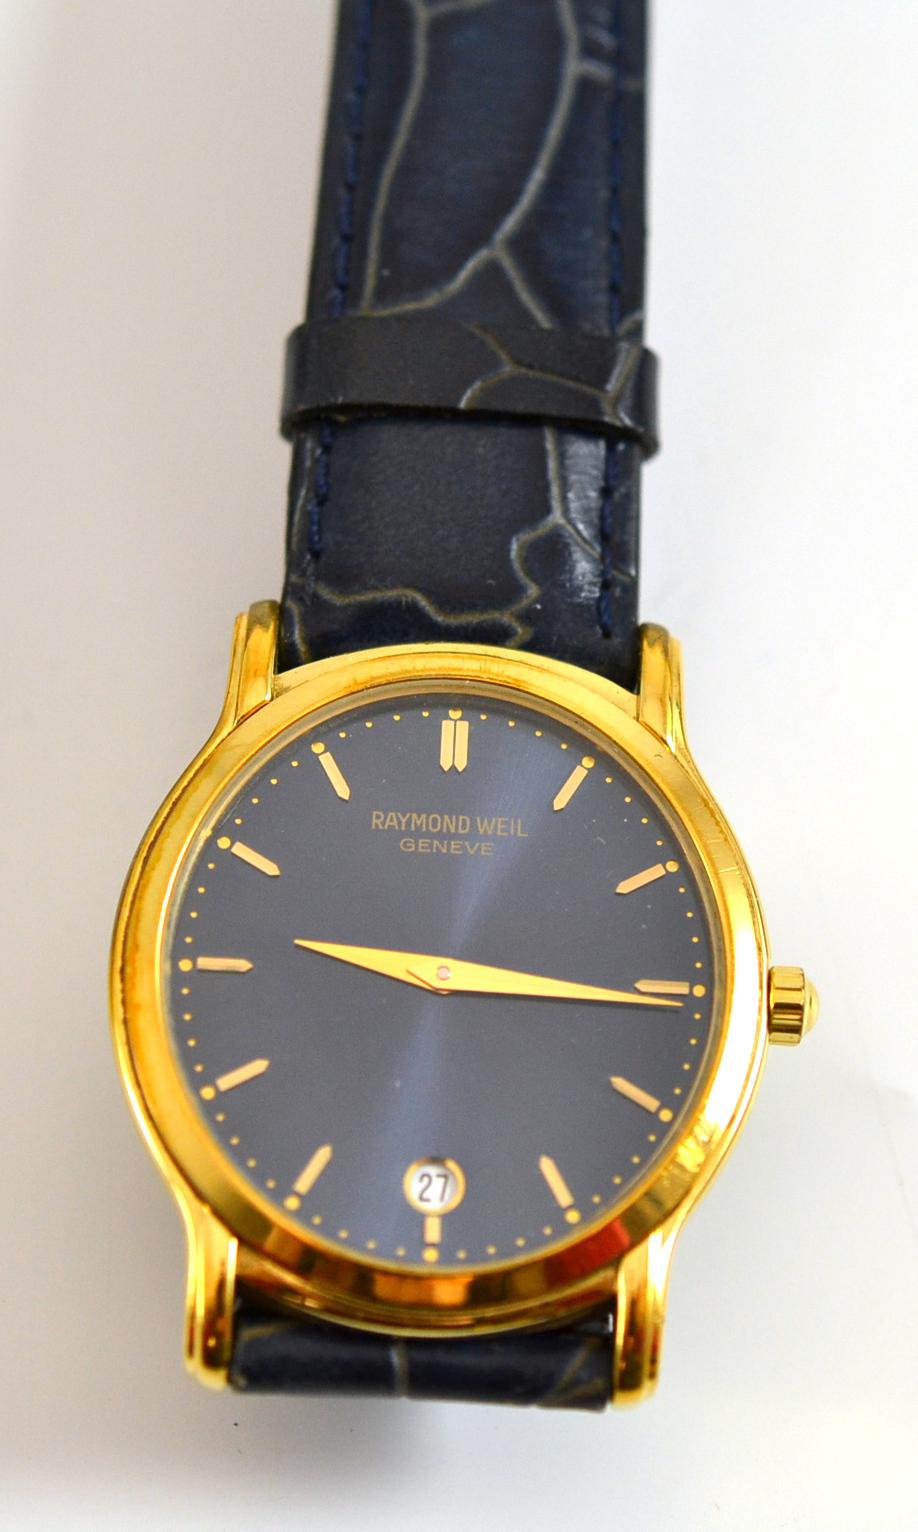 A plated gentleman's wristwatch, signed Raymond Weil, Geneve